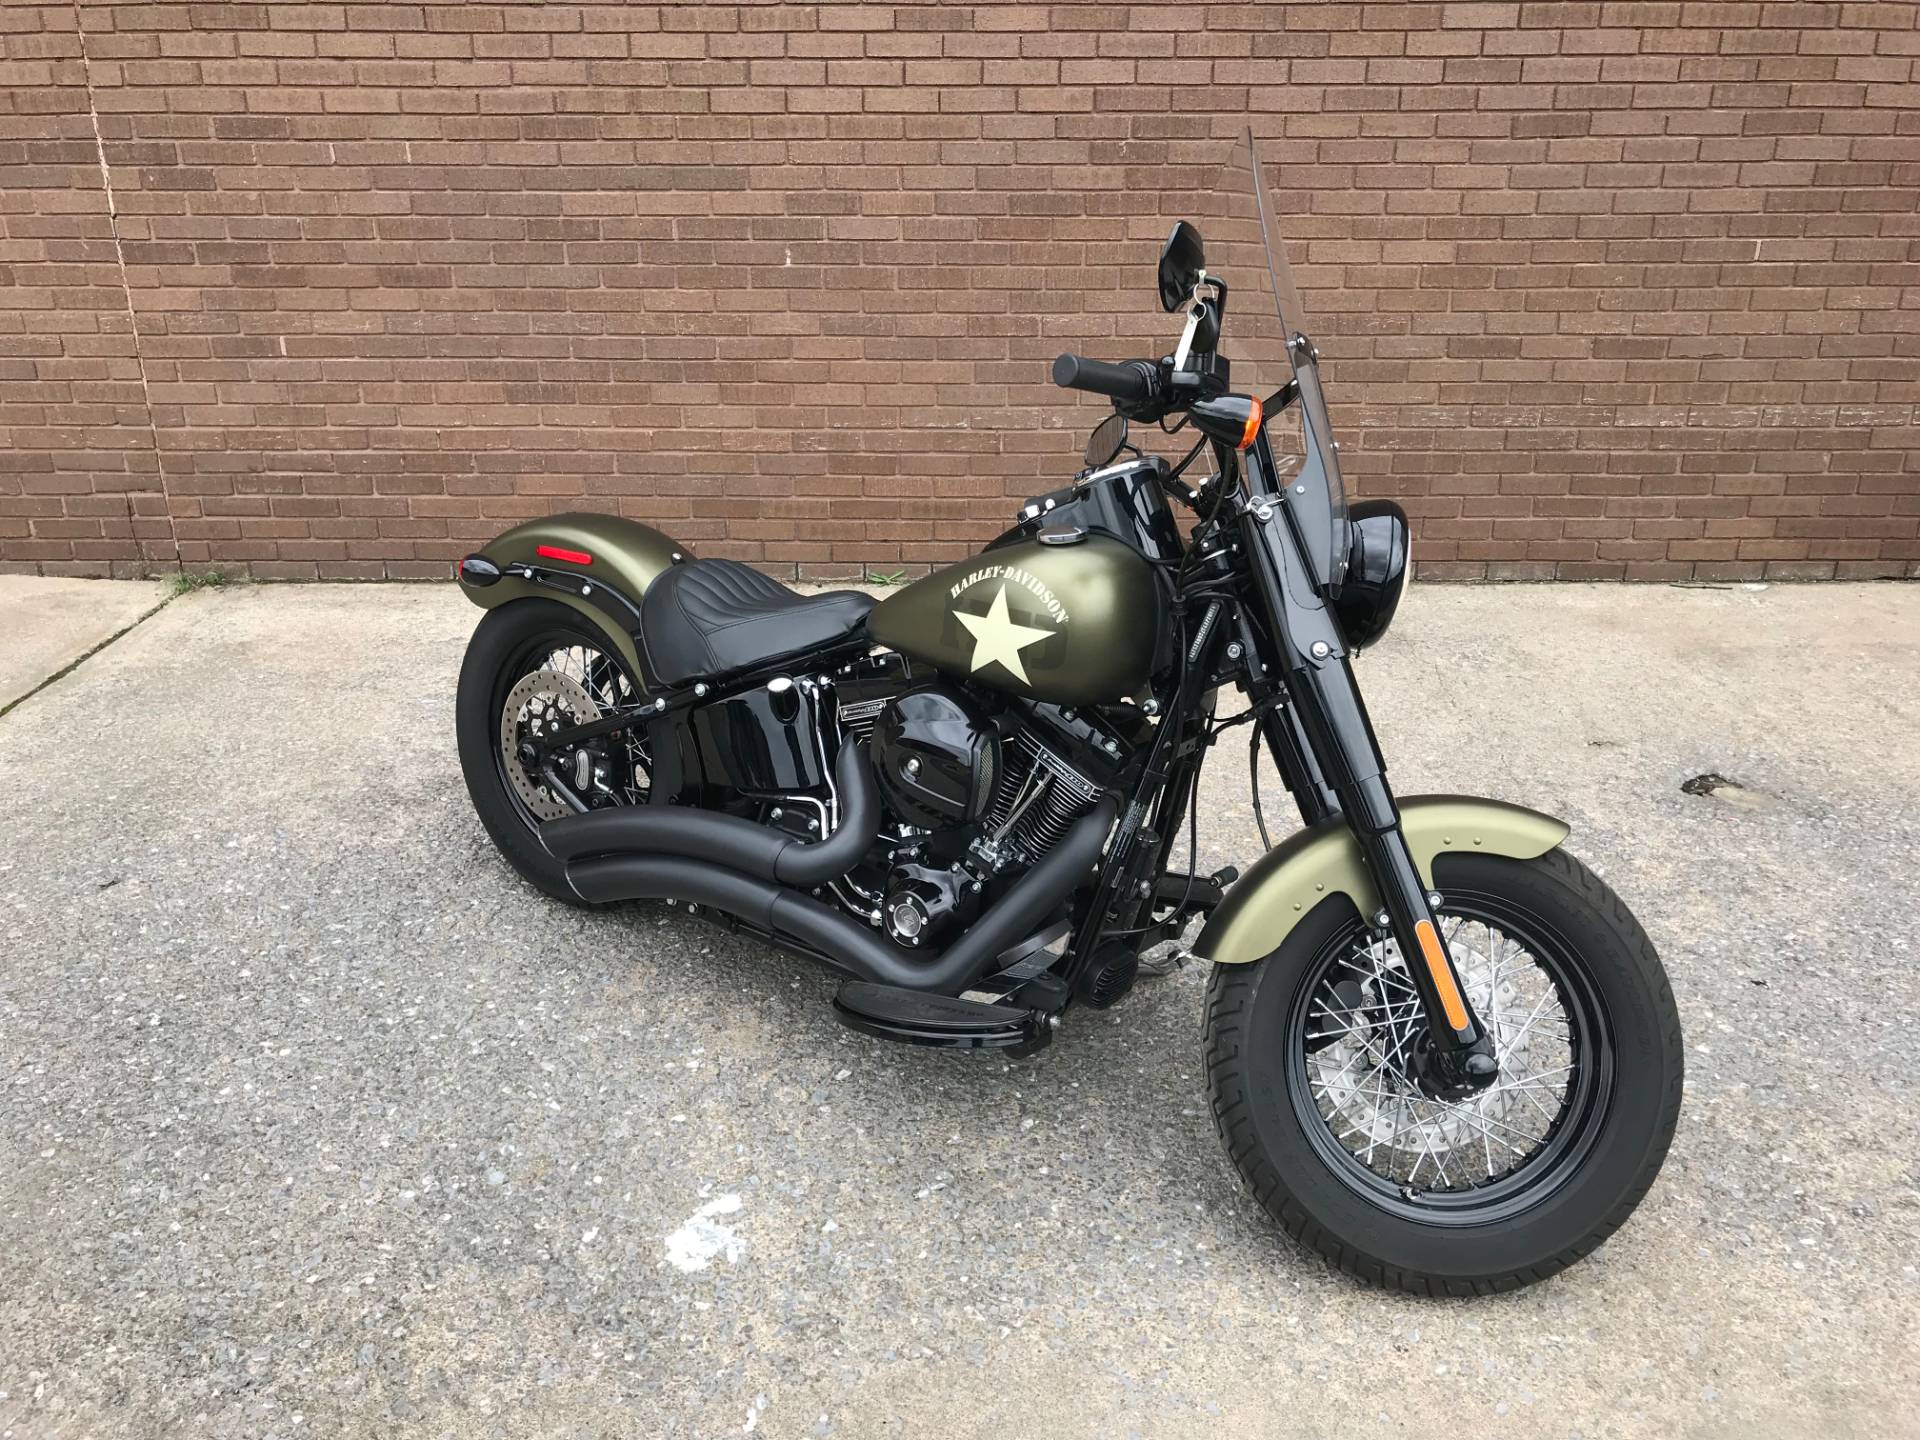 Ide Harley Davidson Softail Ebay